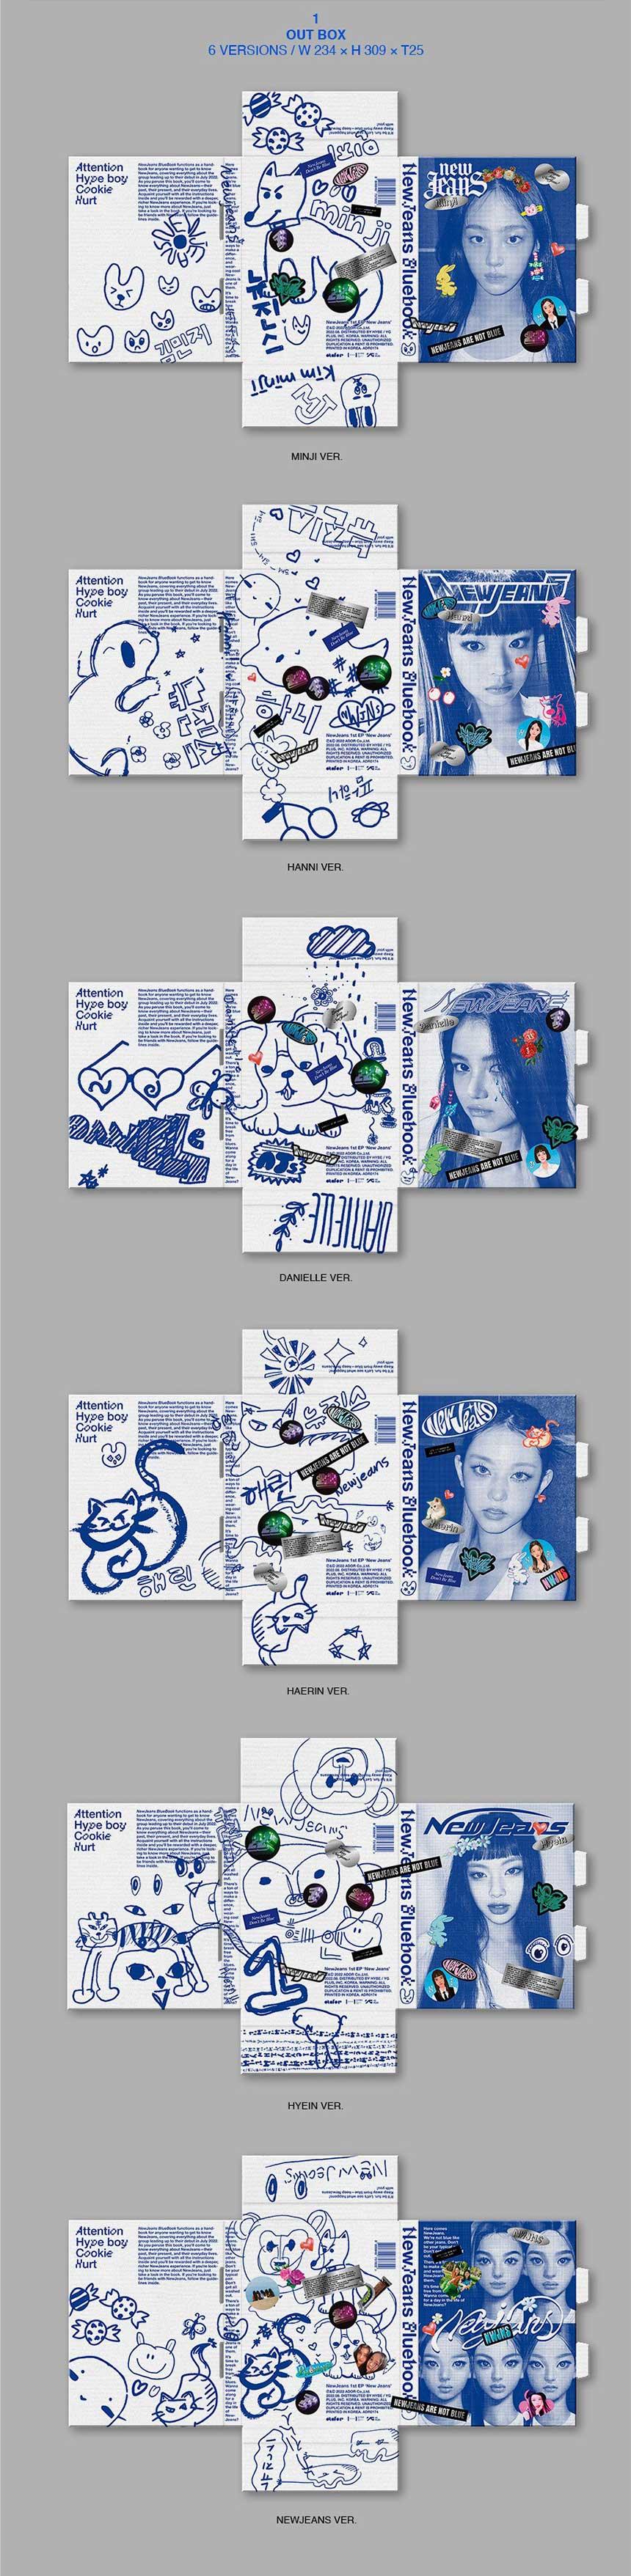 NewJeans - 1st EP 'New Jeans' album [Bluebook ver] (HYEIN)